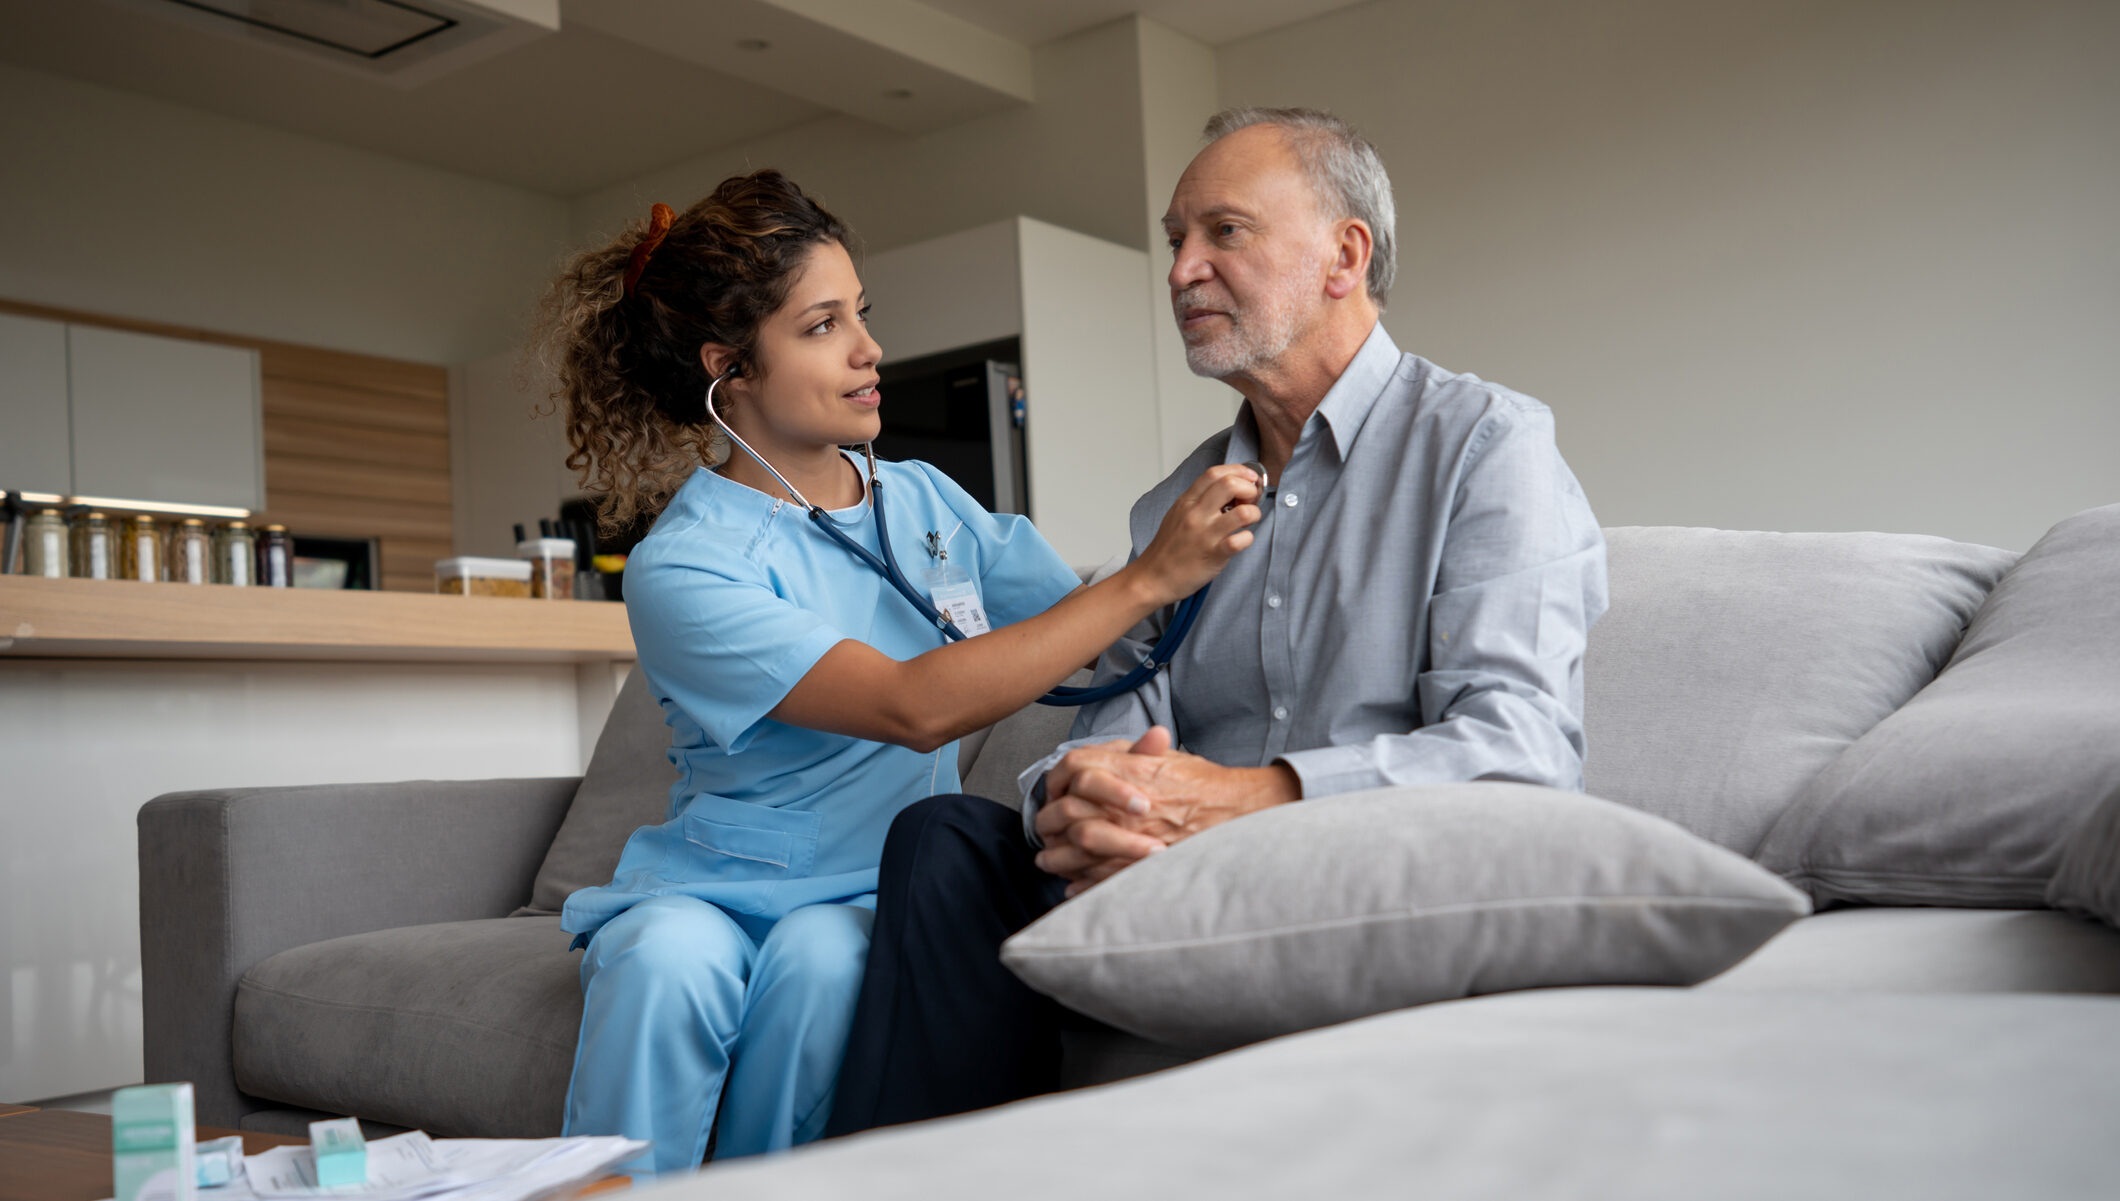 Home caregiver checking a senior man's vitals with a stethoscope